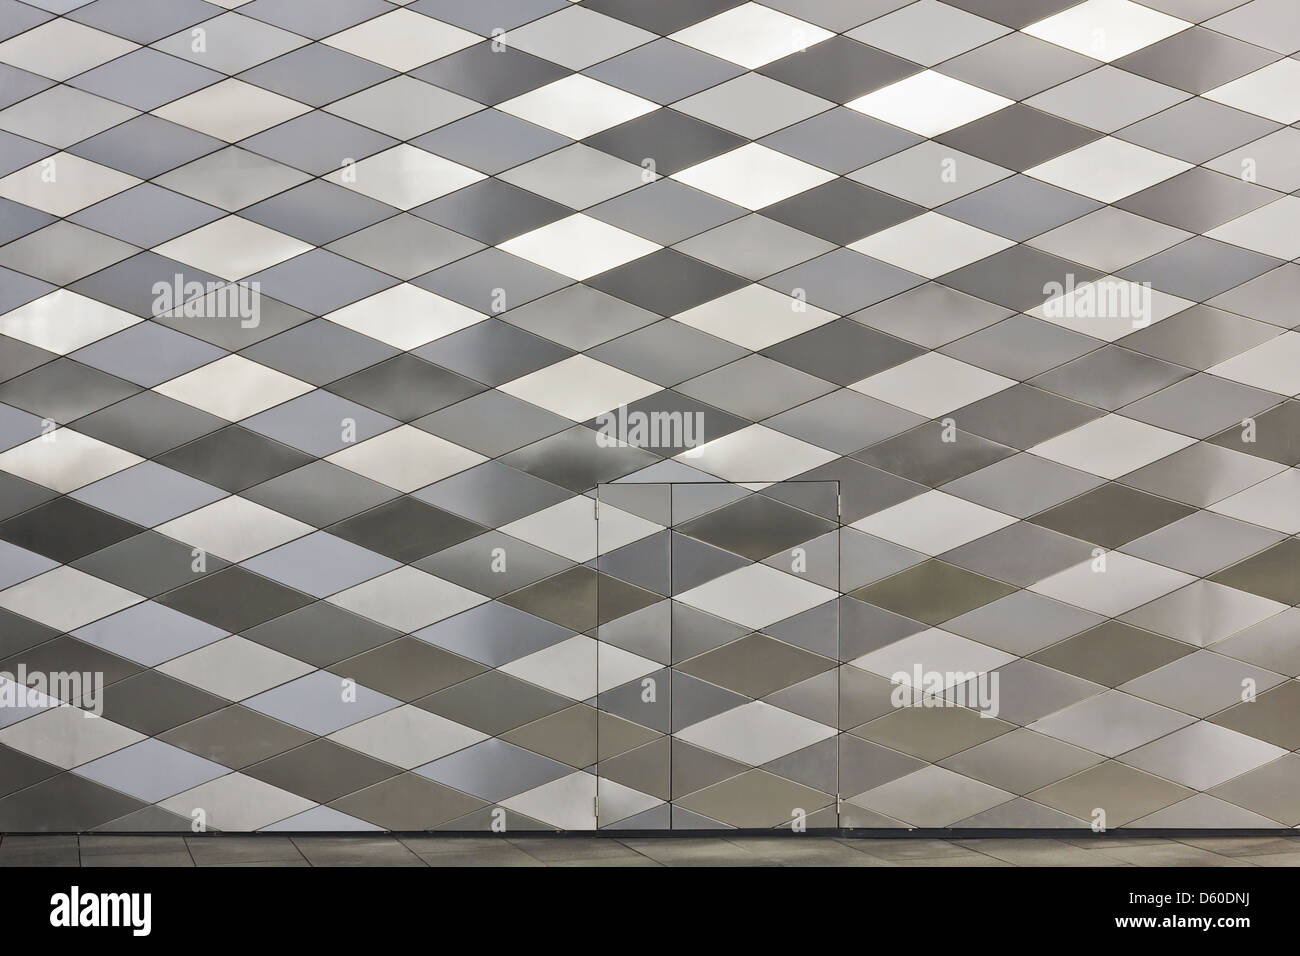 diamond-shaped panels texture Stock Photo